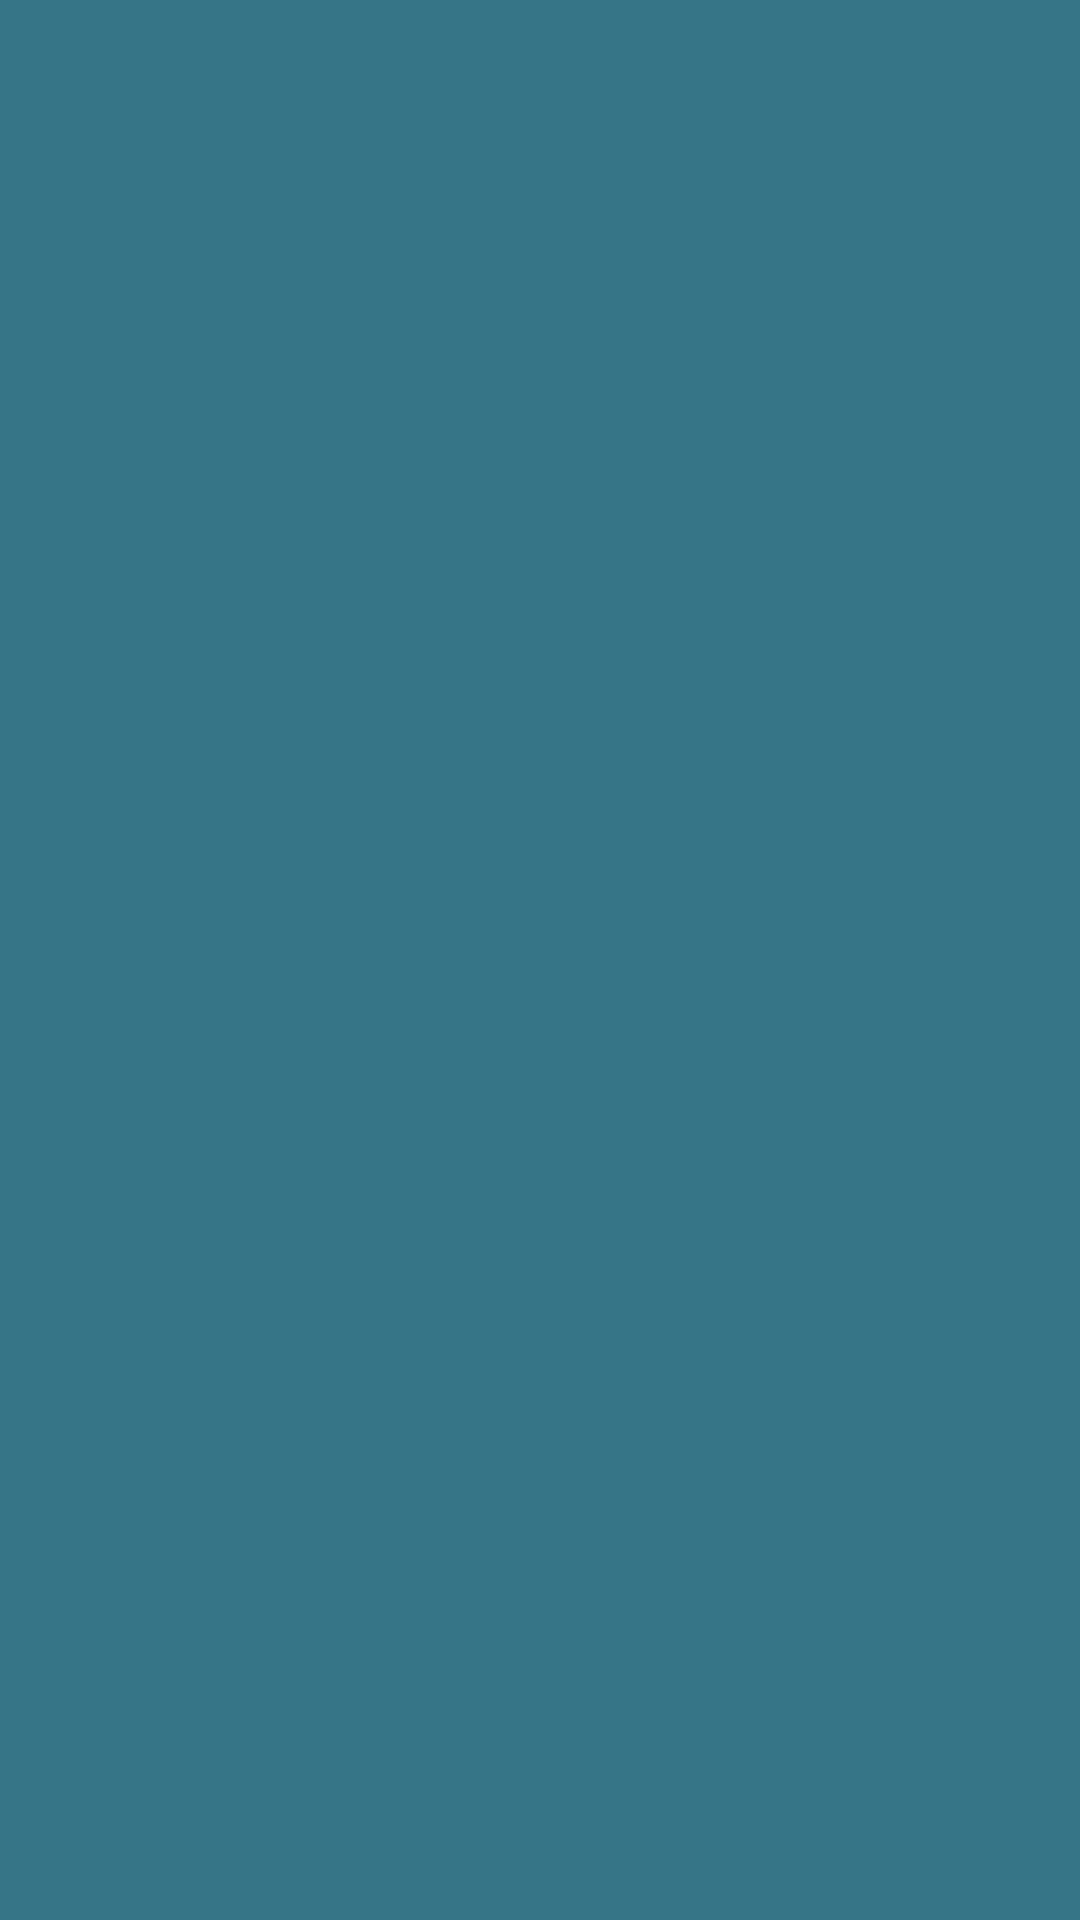 1080x1920 Teal Blue Solid Color Background